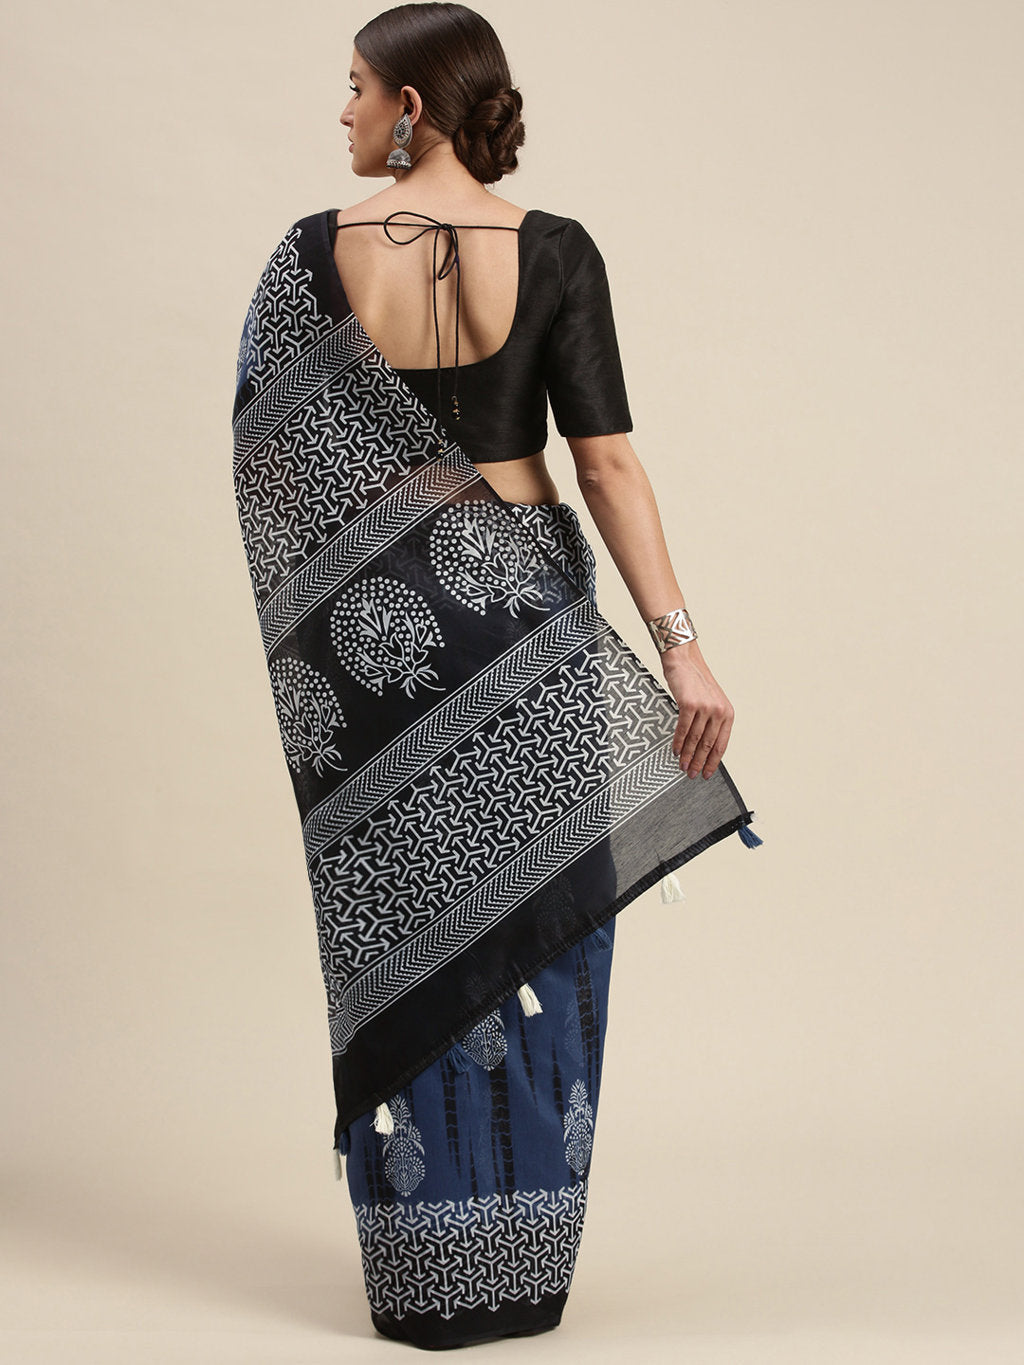 Women's Blue Cotton Blend Printed Traditional Tassle Saree - Sangam Prints